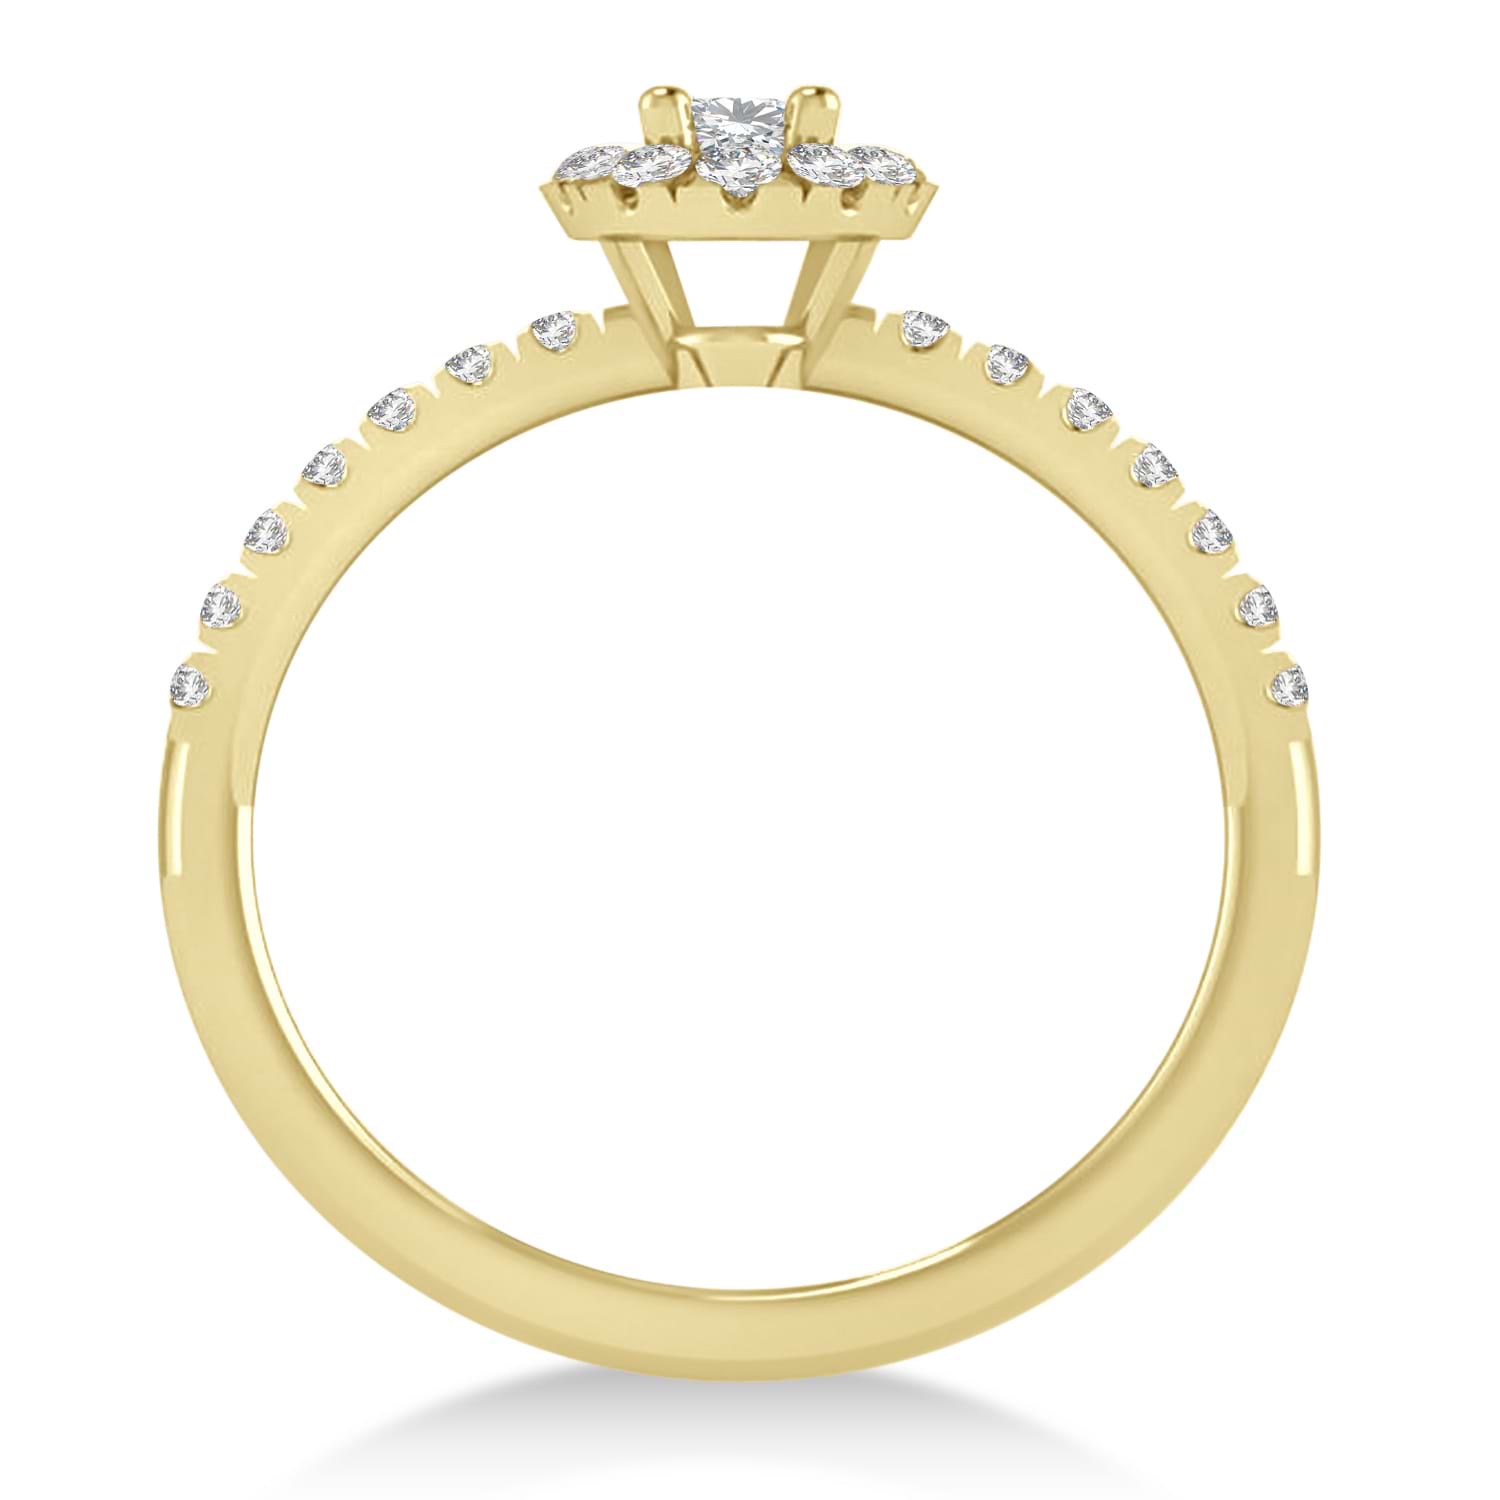 Oval Moissanite & Diamond Halo Engagement Ring 14k Yellow Gold (0.60ct)